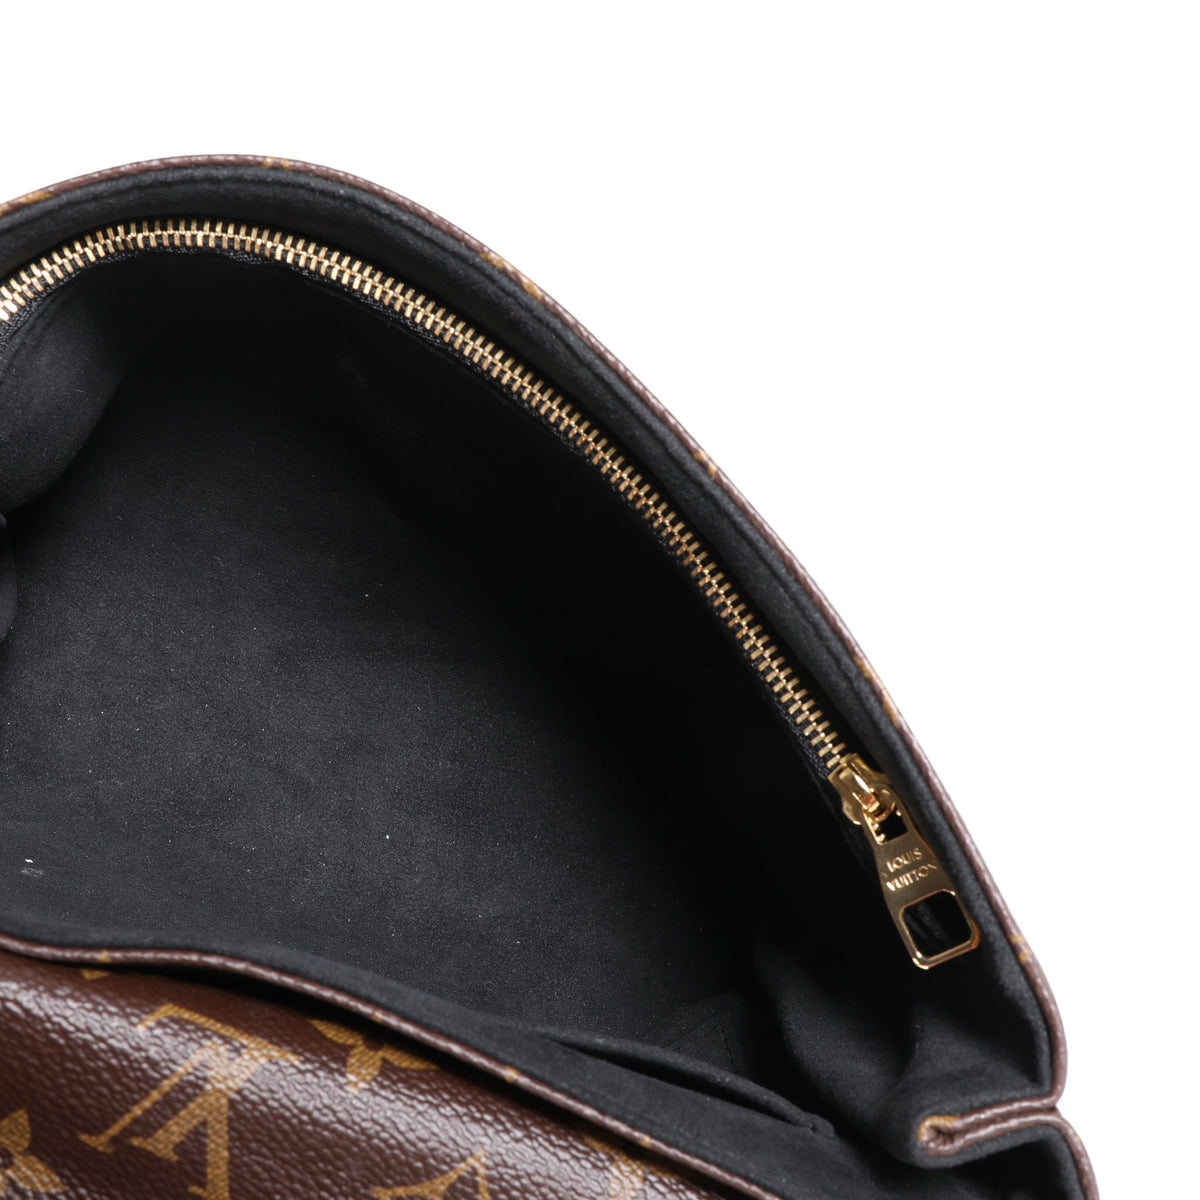 Louis Vuitton Saint Placide Shoulder Bag in Black and Brown